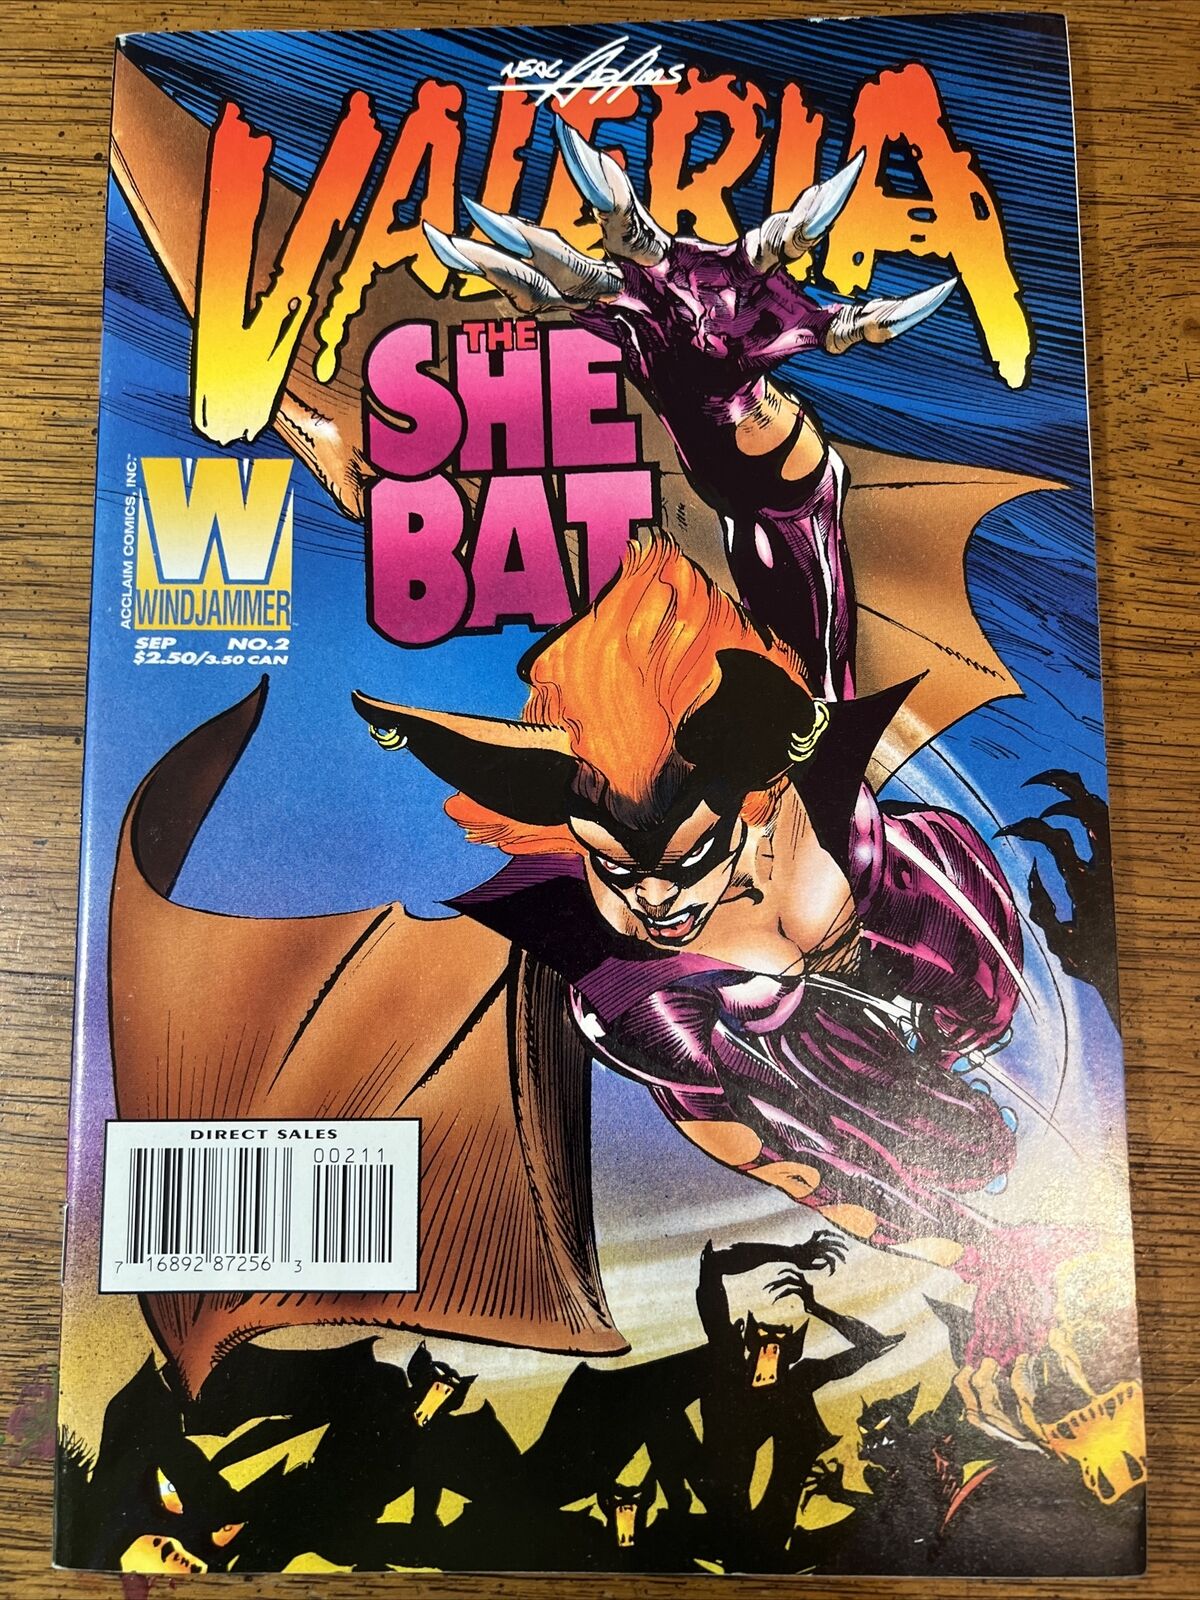 Valeria the She Bat #2 (Windjammer)  at $49+